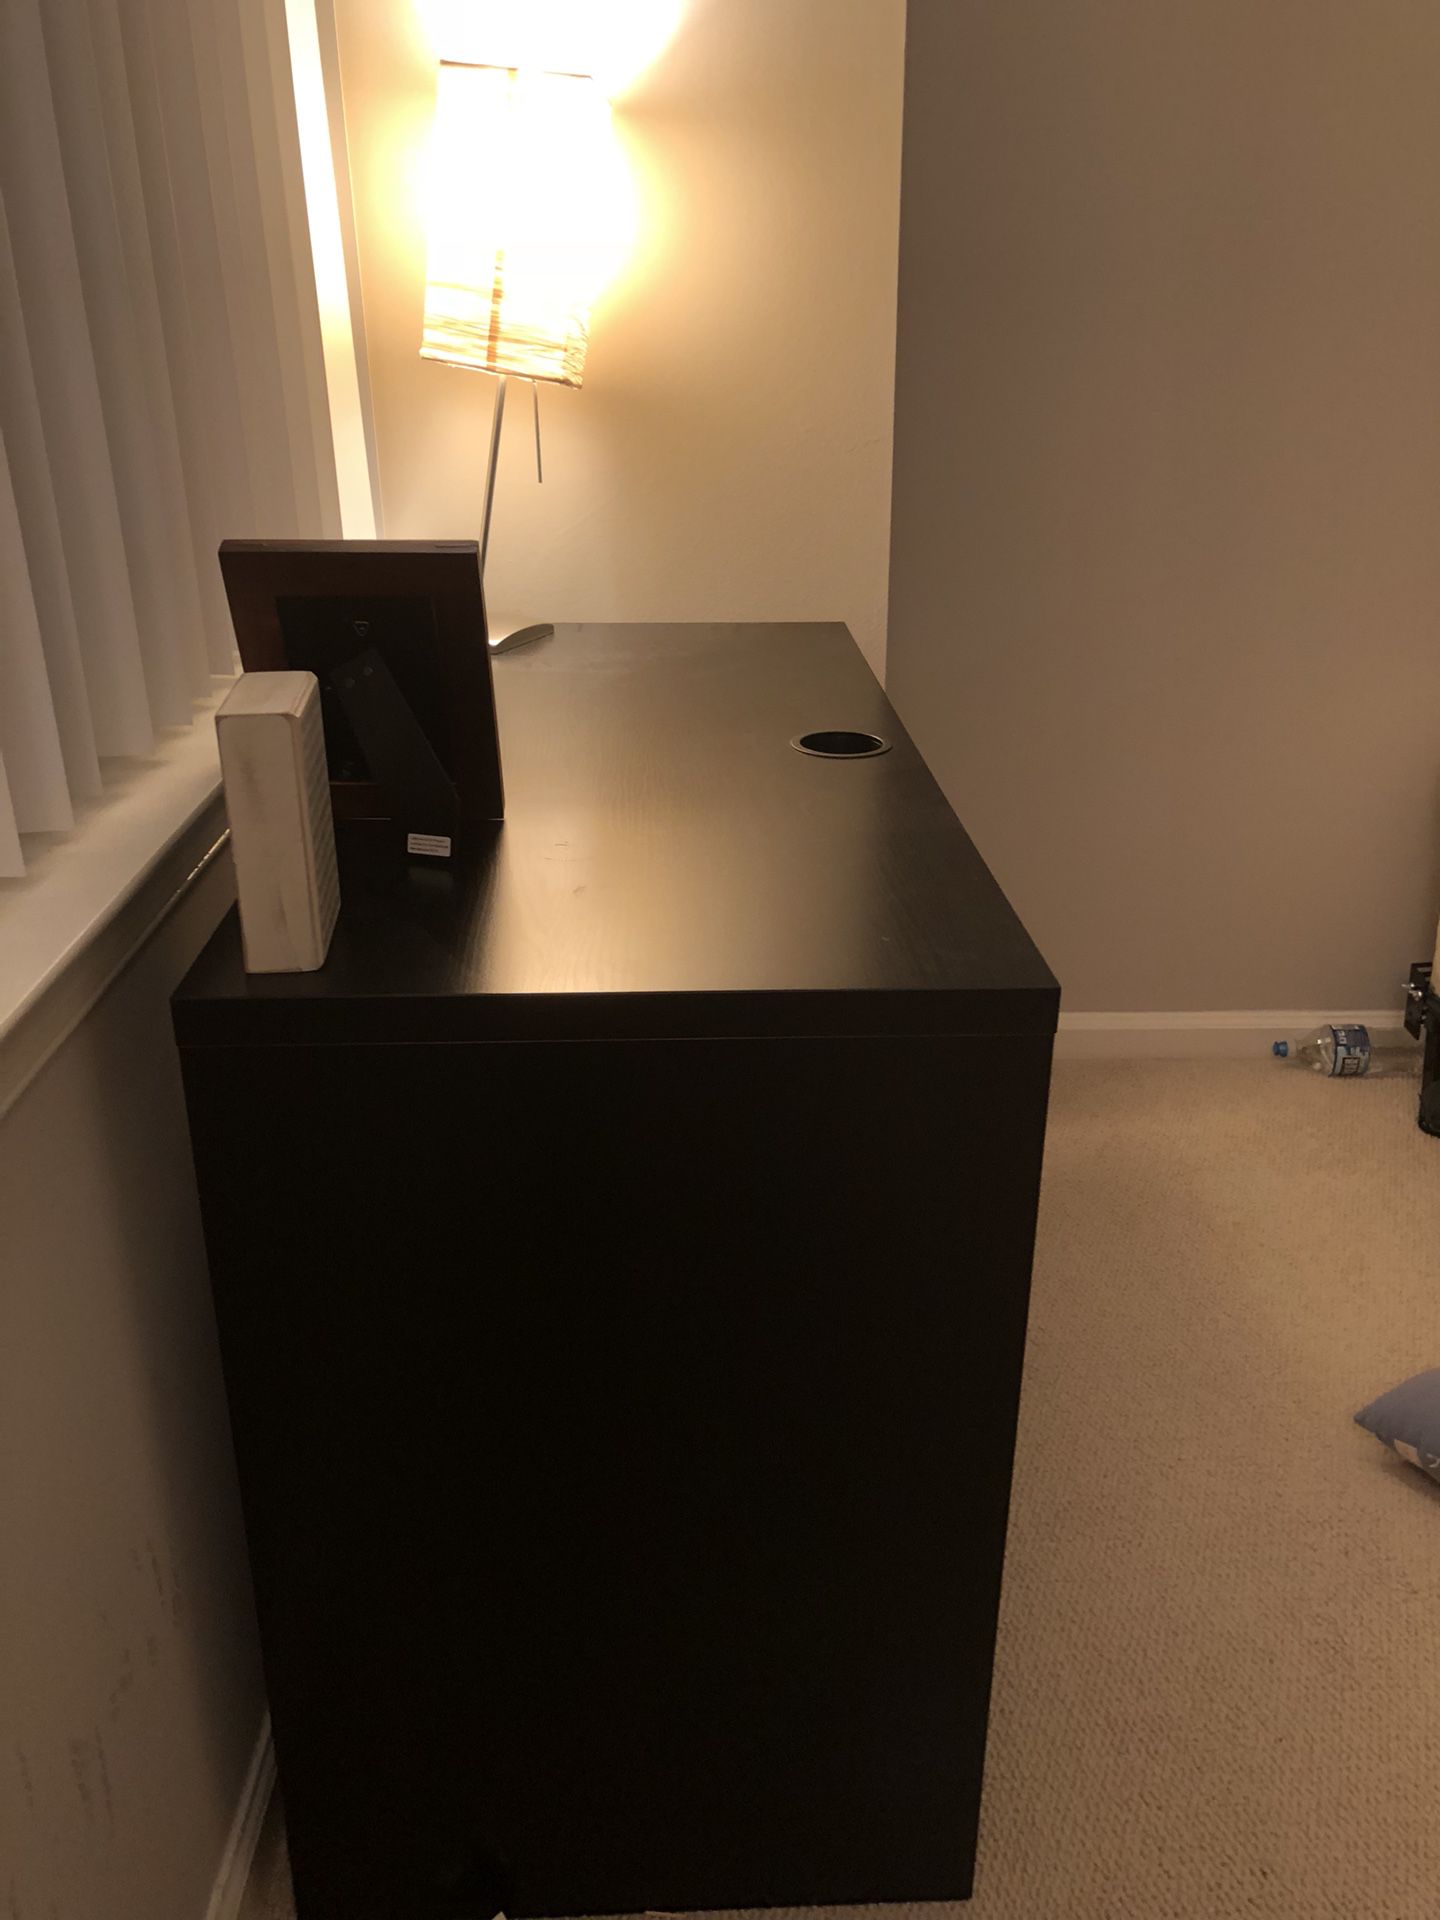 IKEA black desk